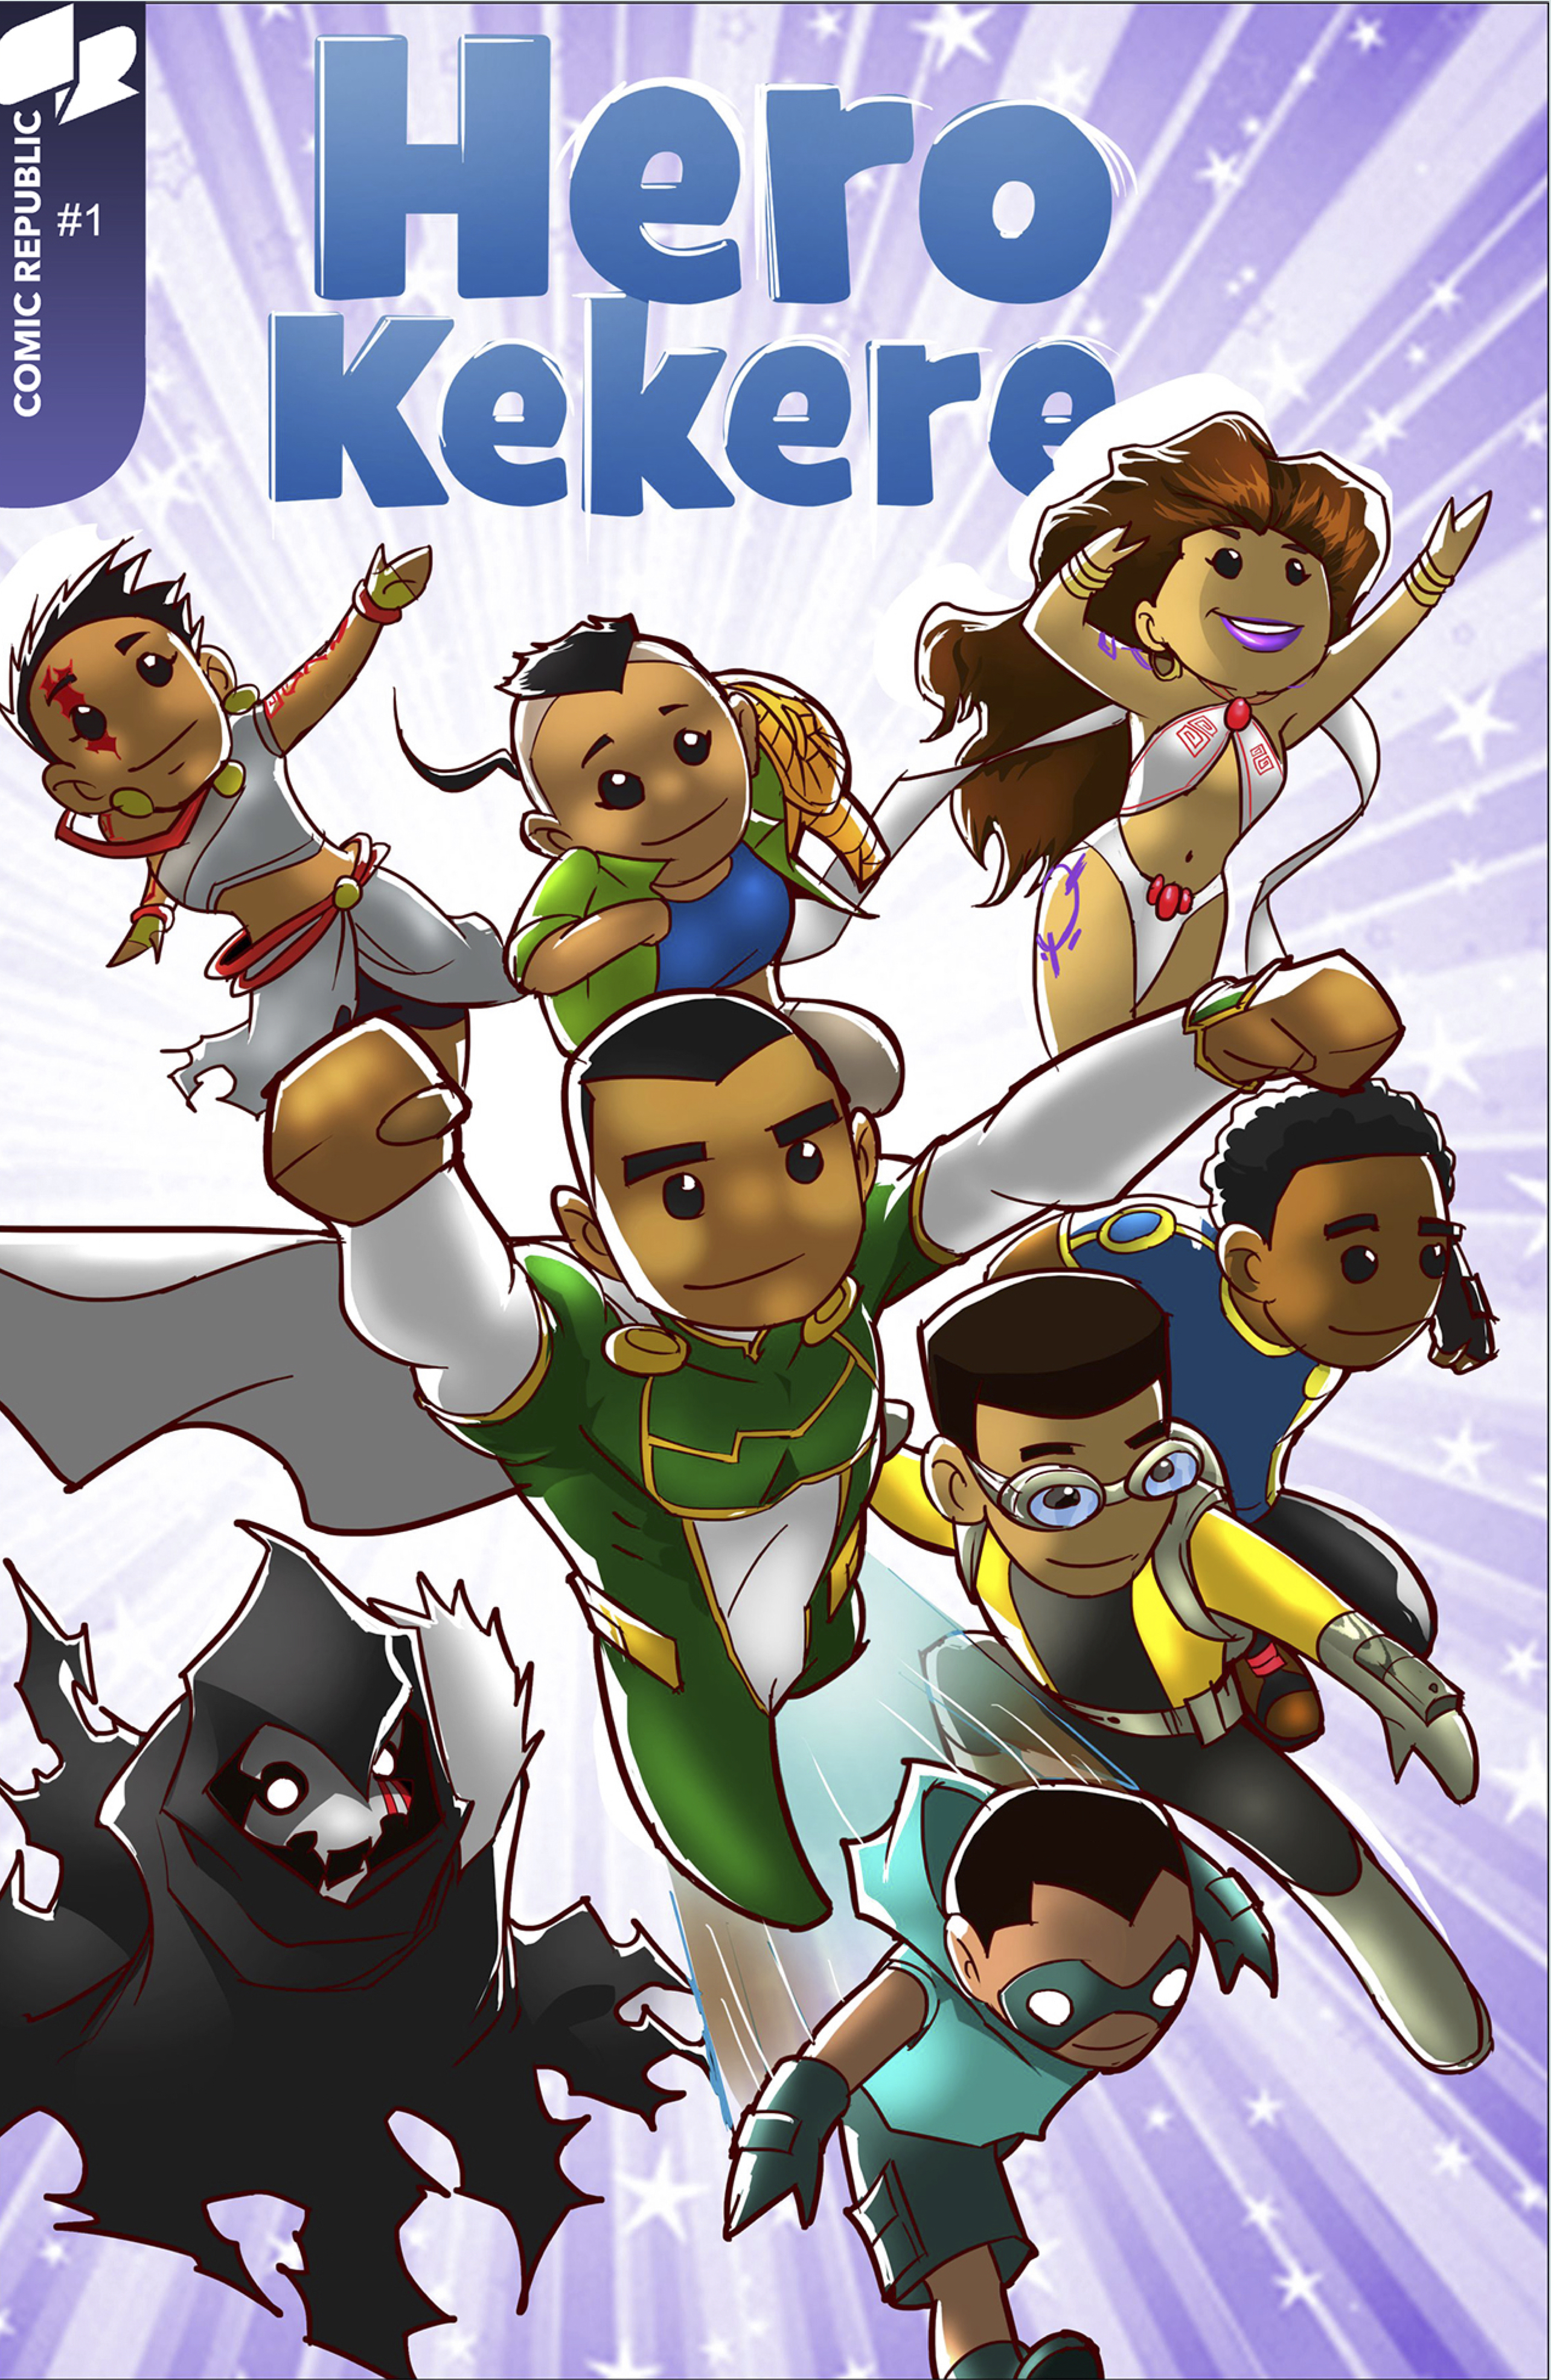 Hero Kekere comic cover, showcasing cute, child like versions of Comic Republic's heroes roster. 